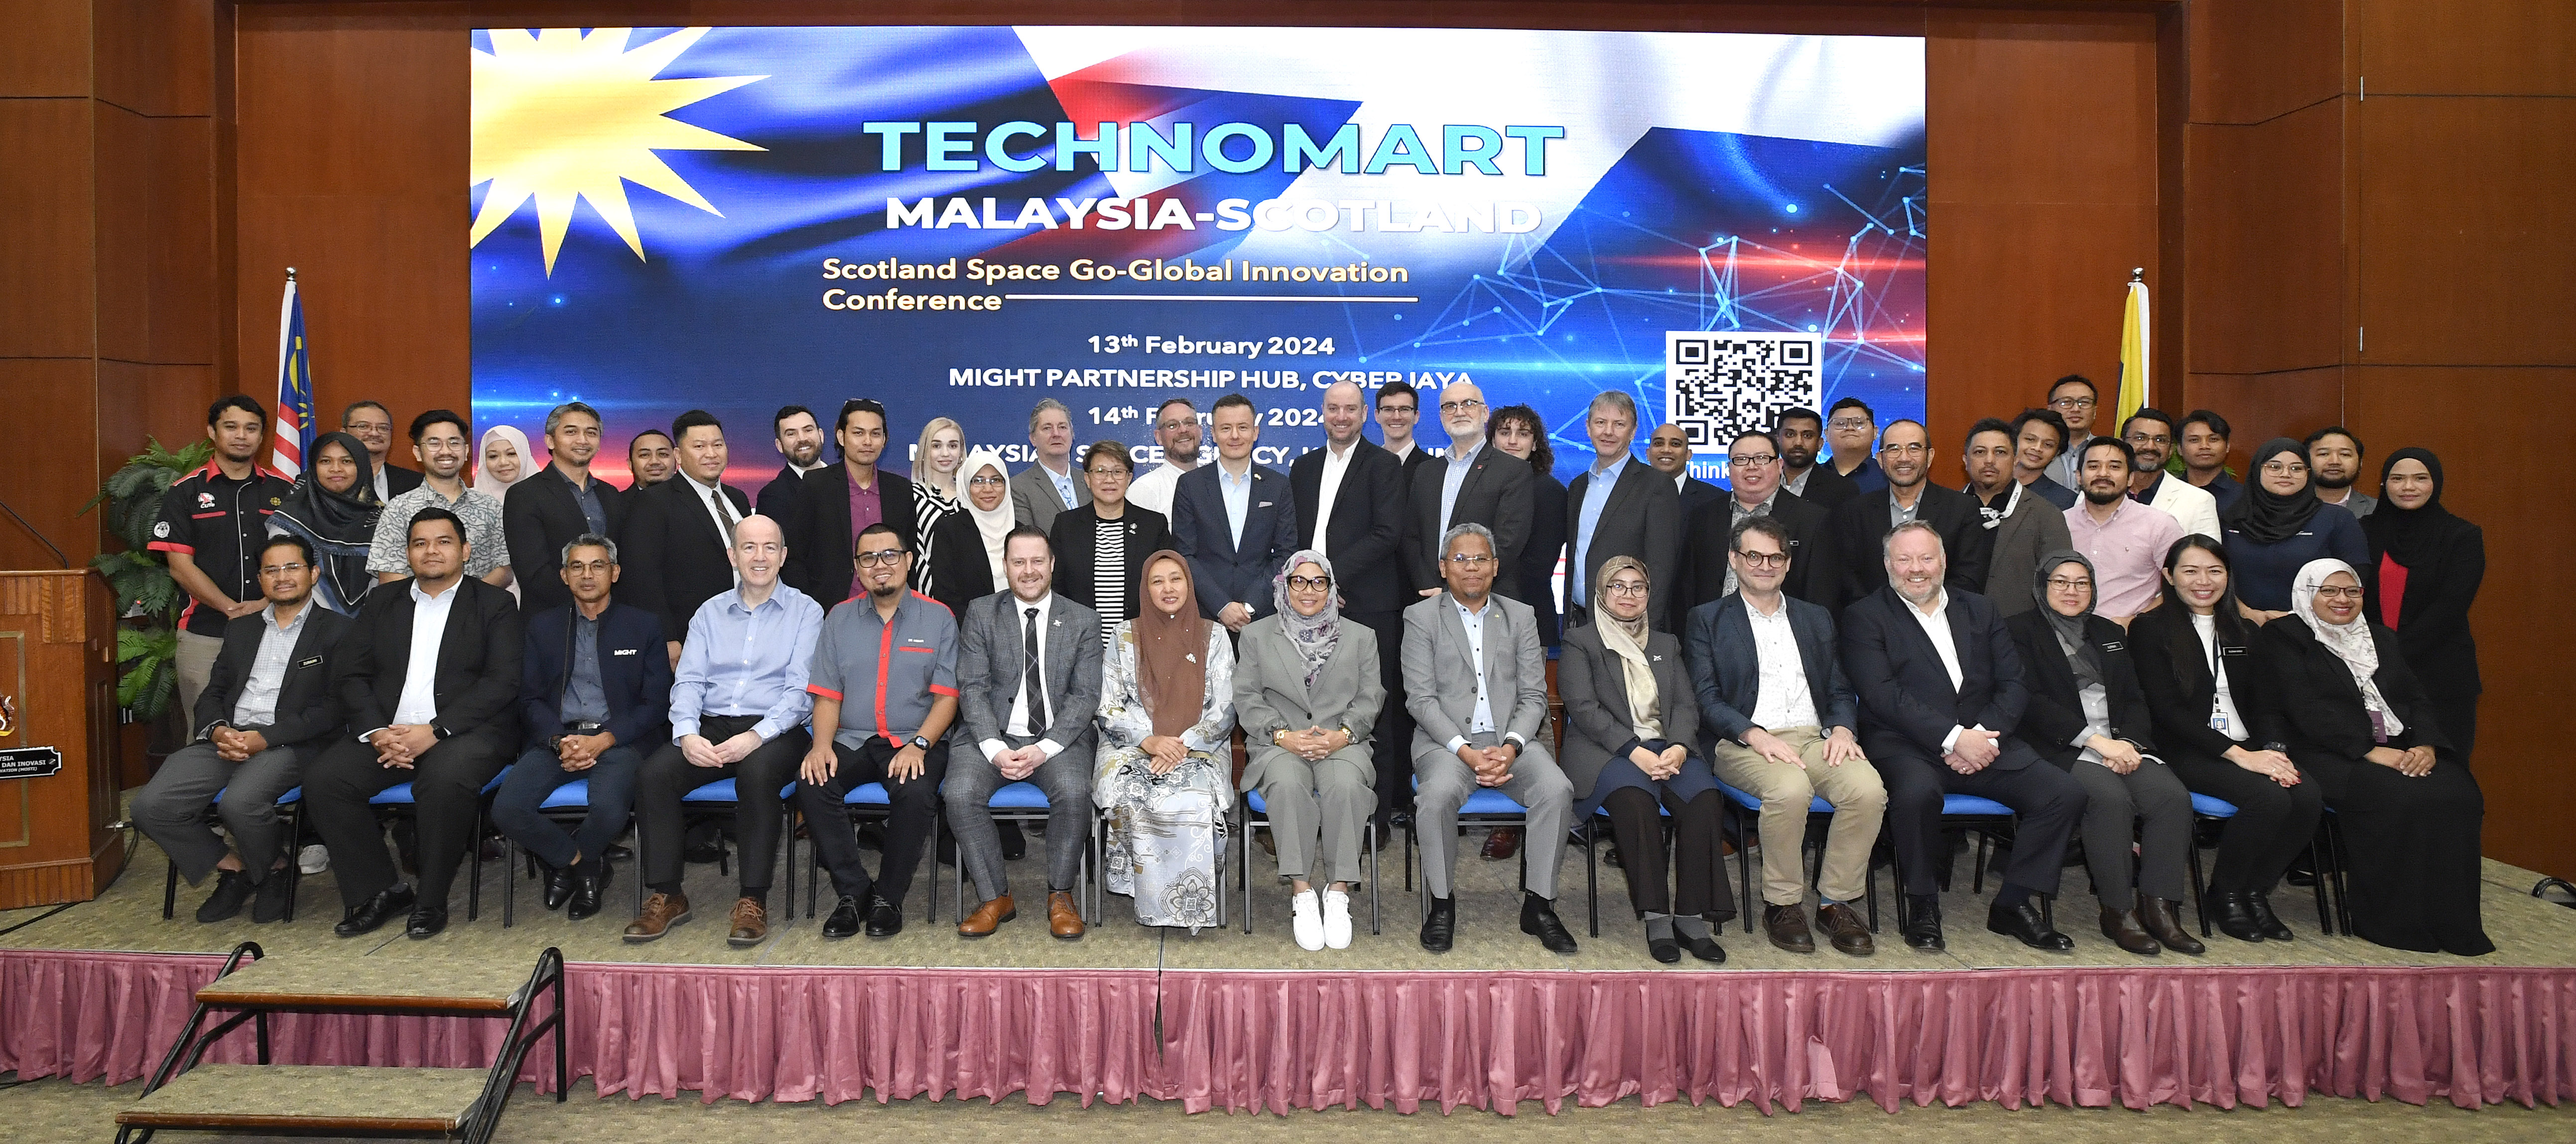 Program TECHNOMART Malaysia – Scotland